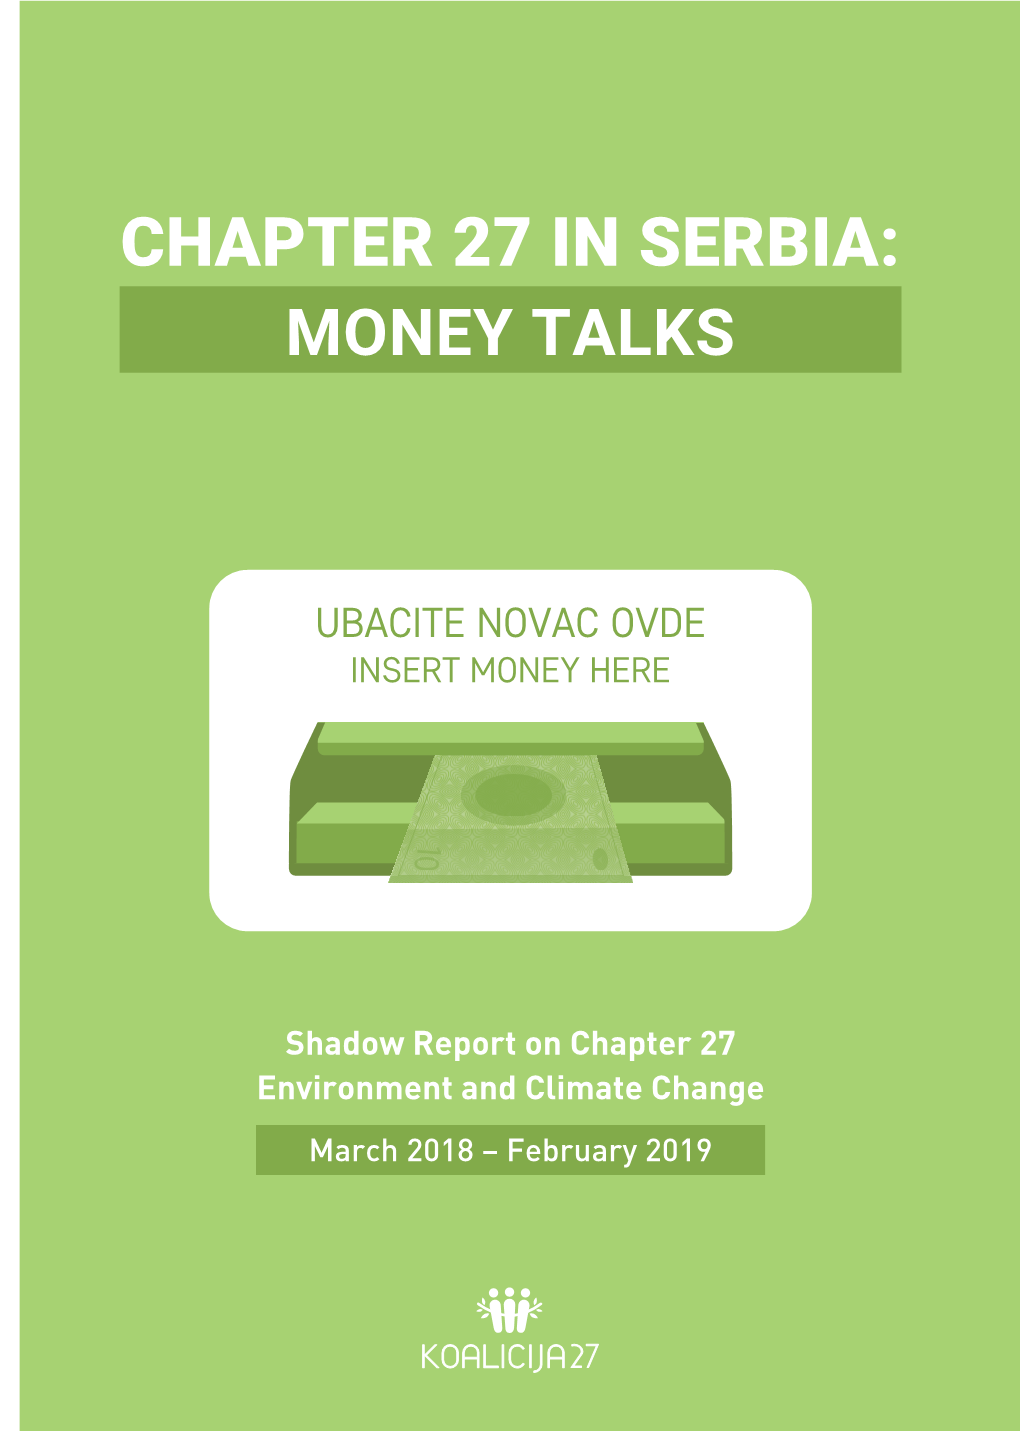 Chapter 27 in Serbia: Money Talks